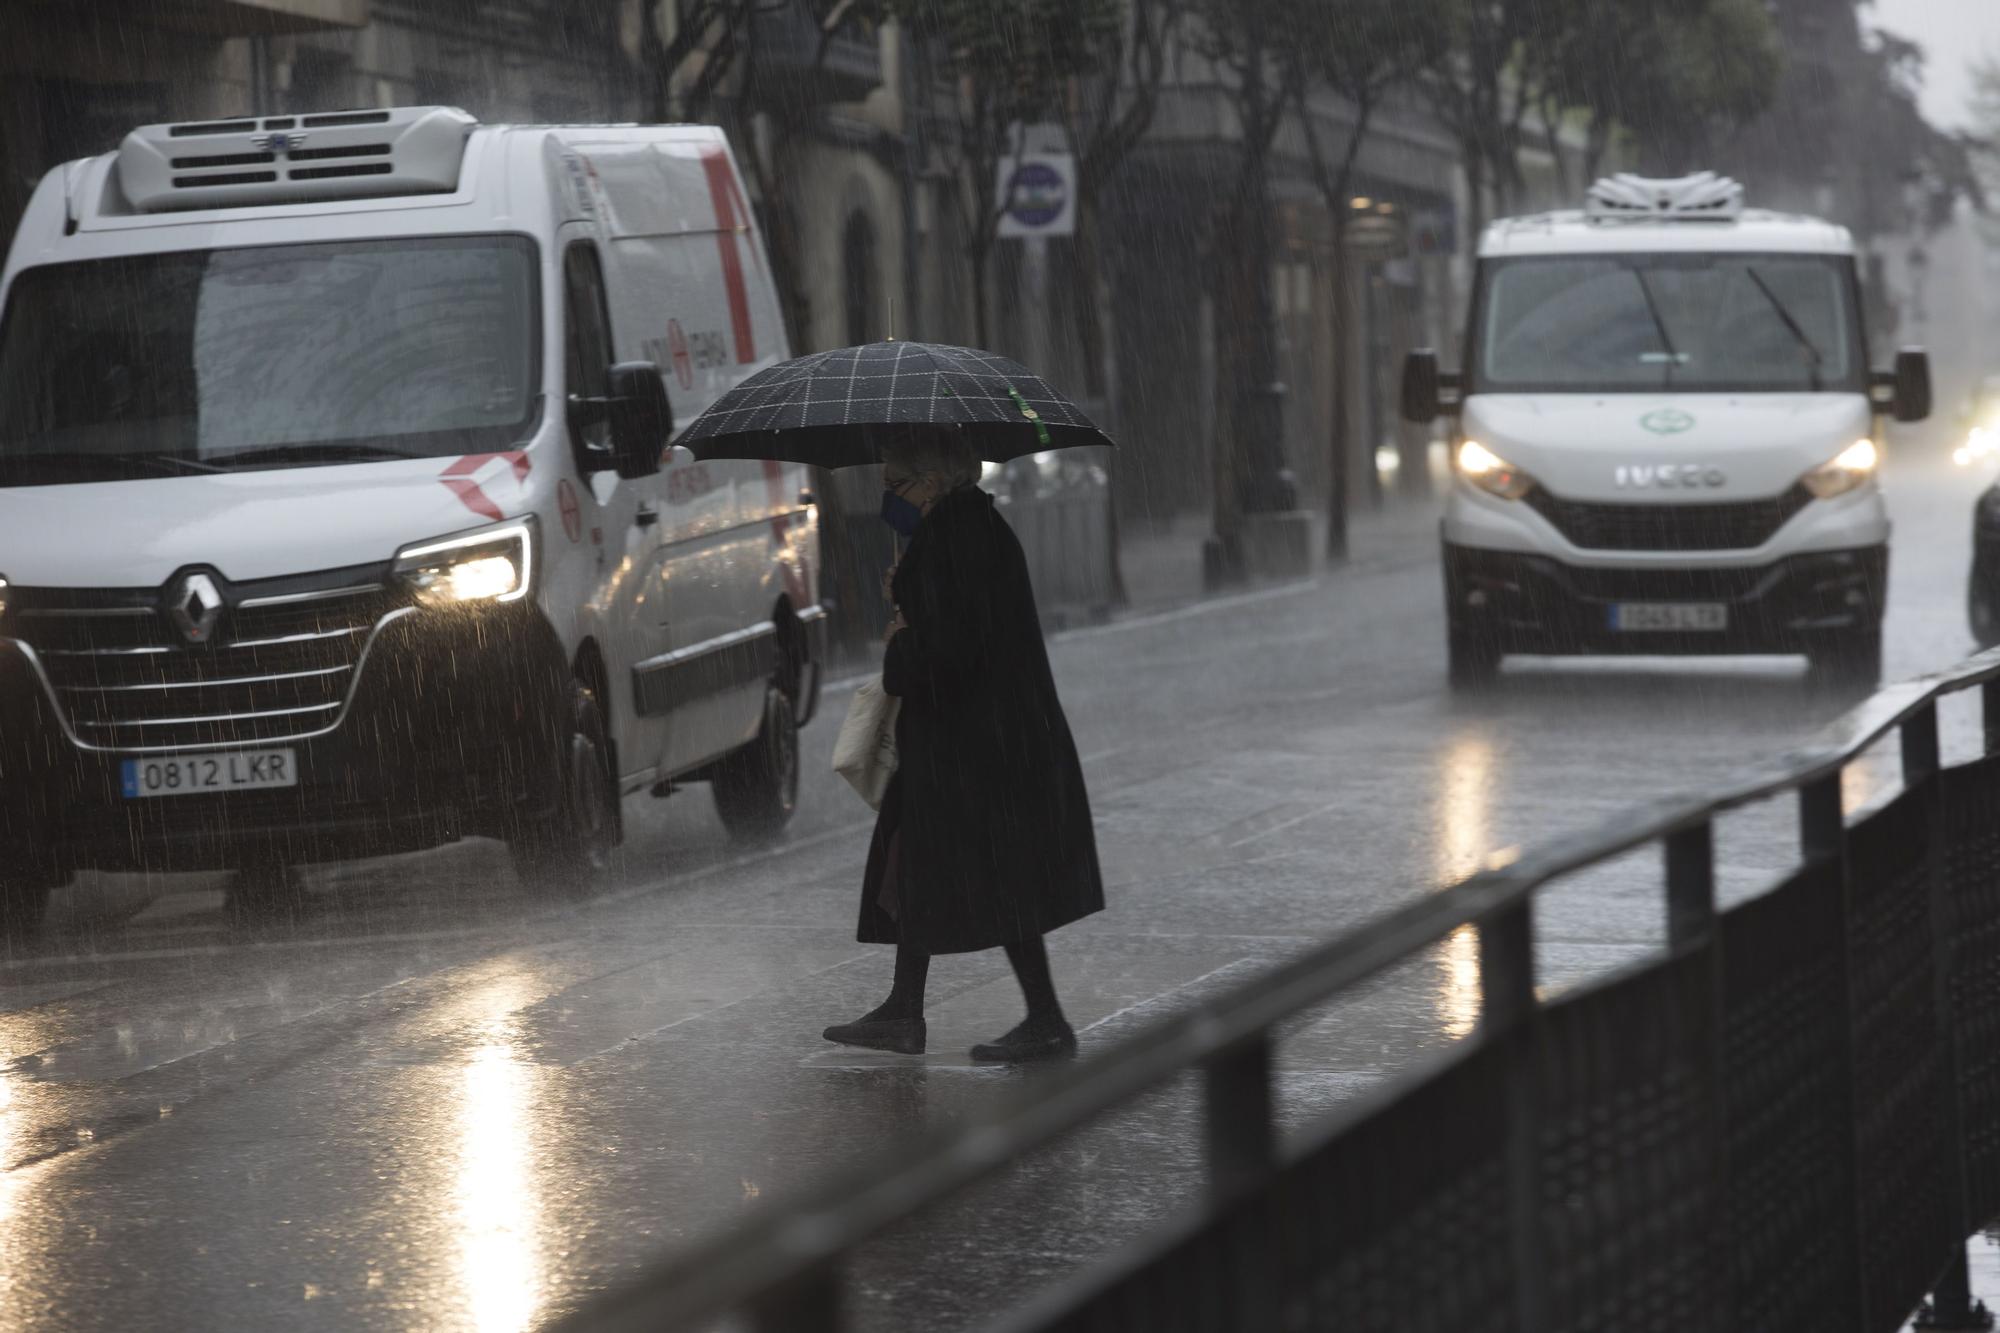 Intensa jornada de lluvias en Oviedo